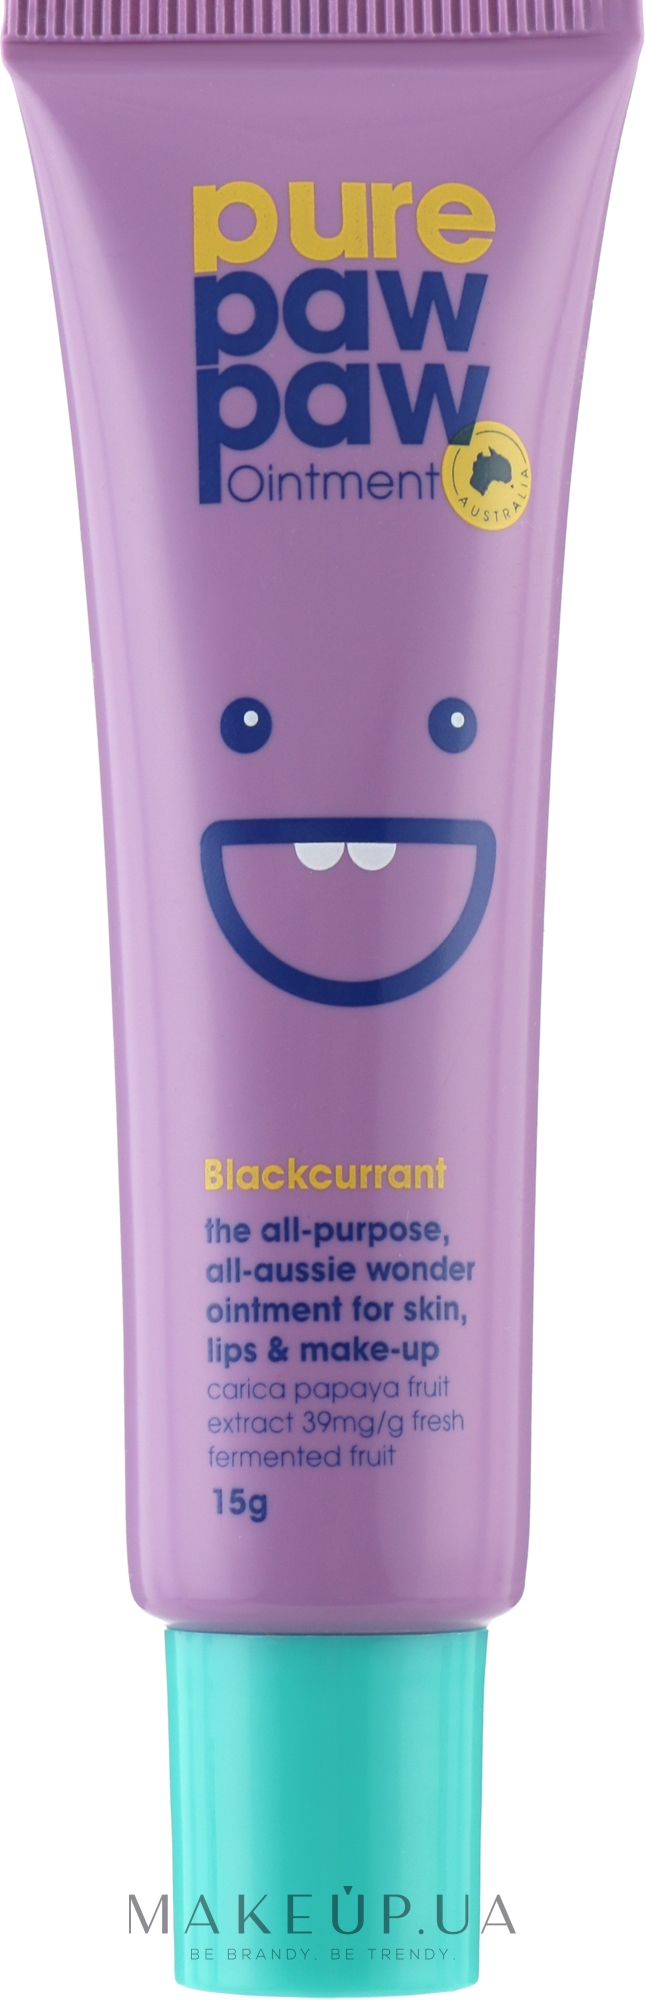 Бальзам для губ "Blackurrant" - Pure Paw Paw Ointment Blackurrant — фото 15g